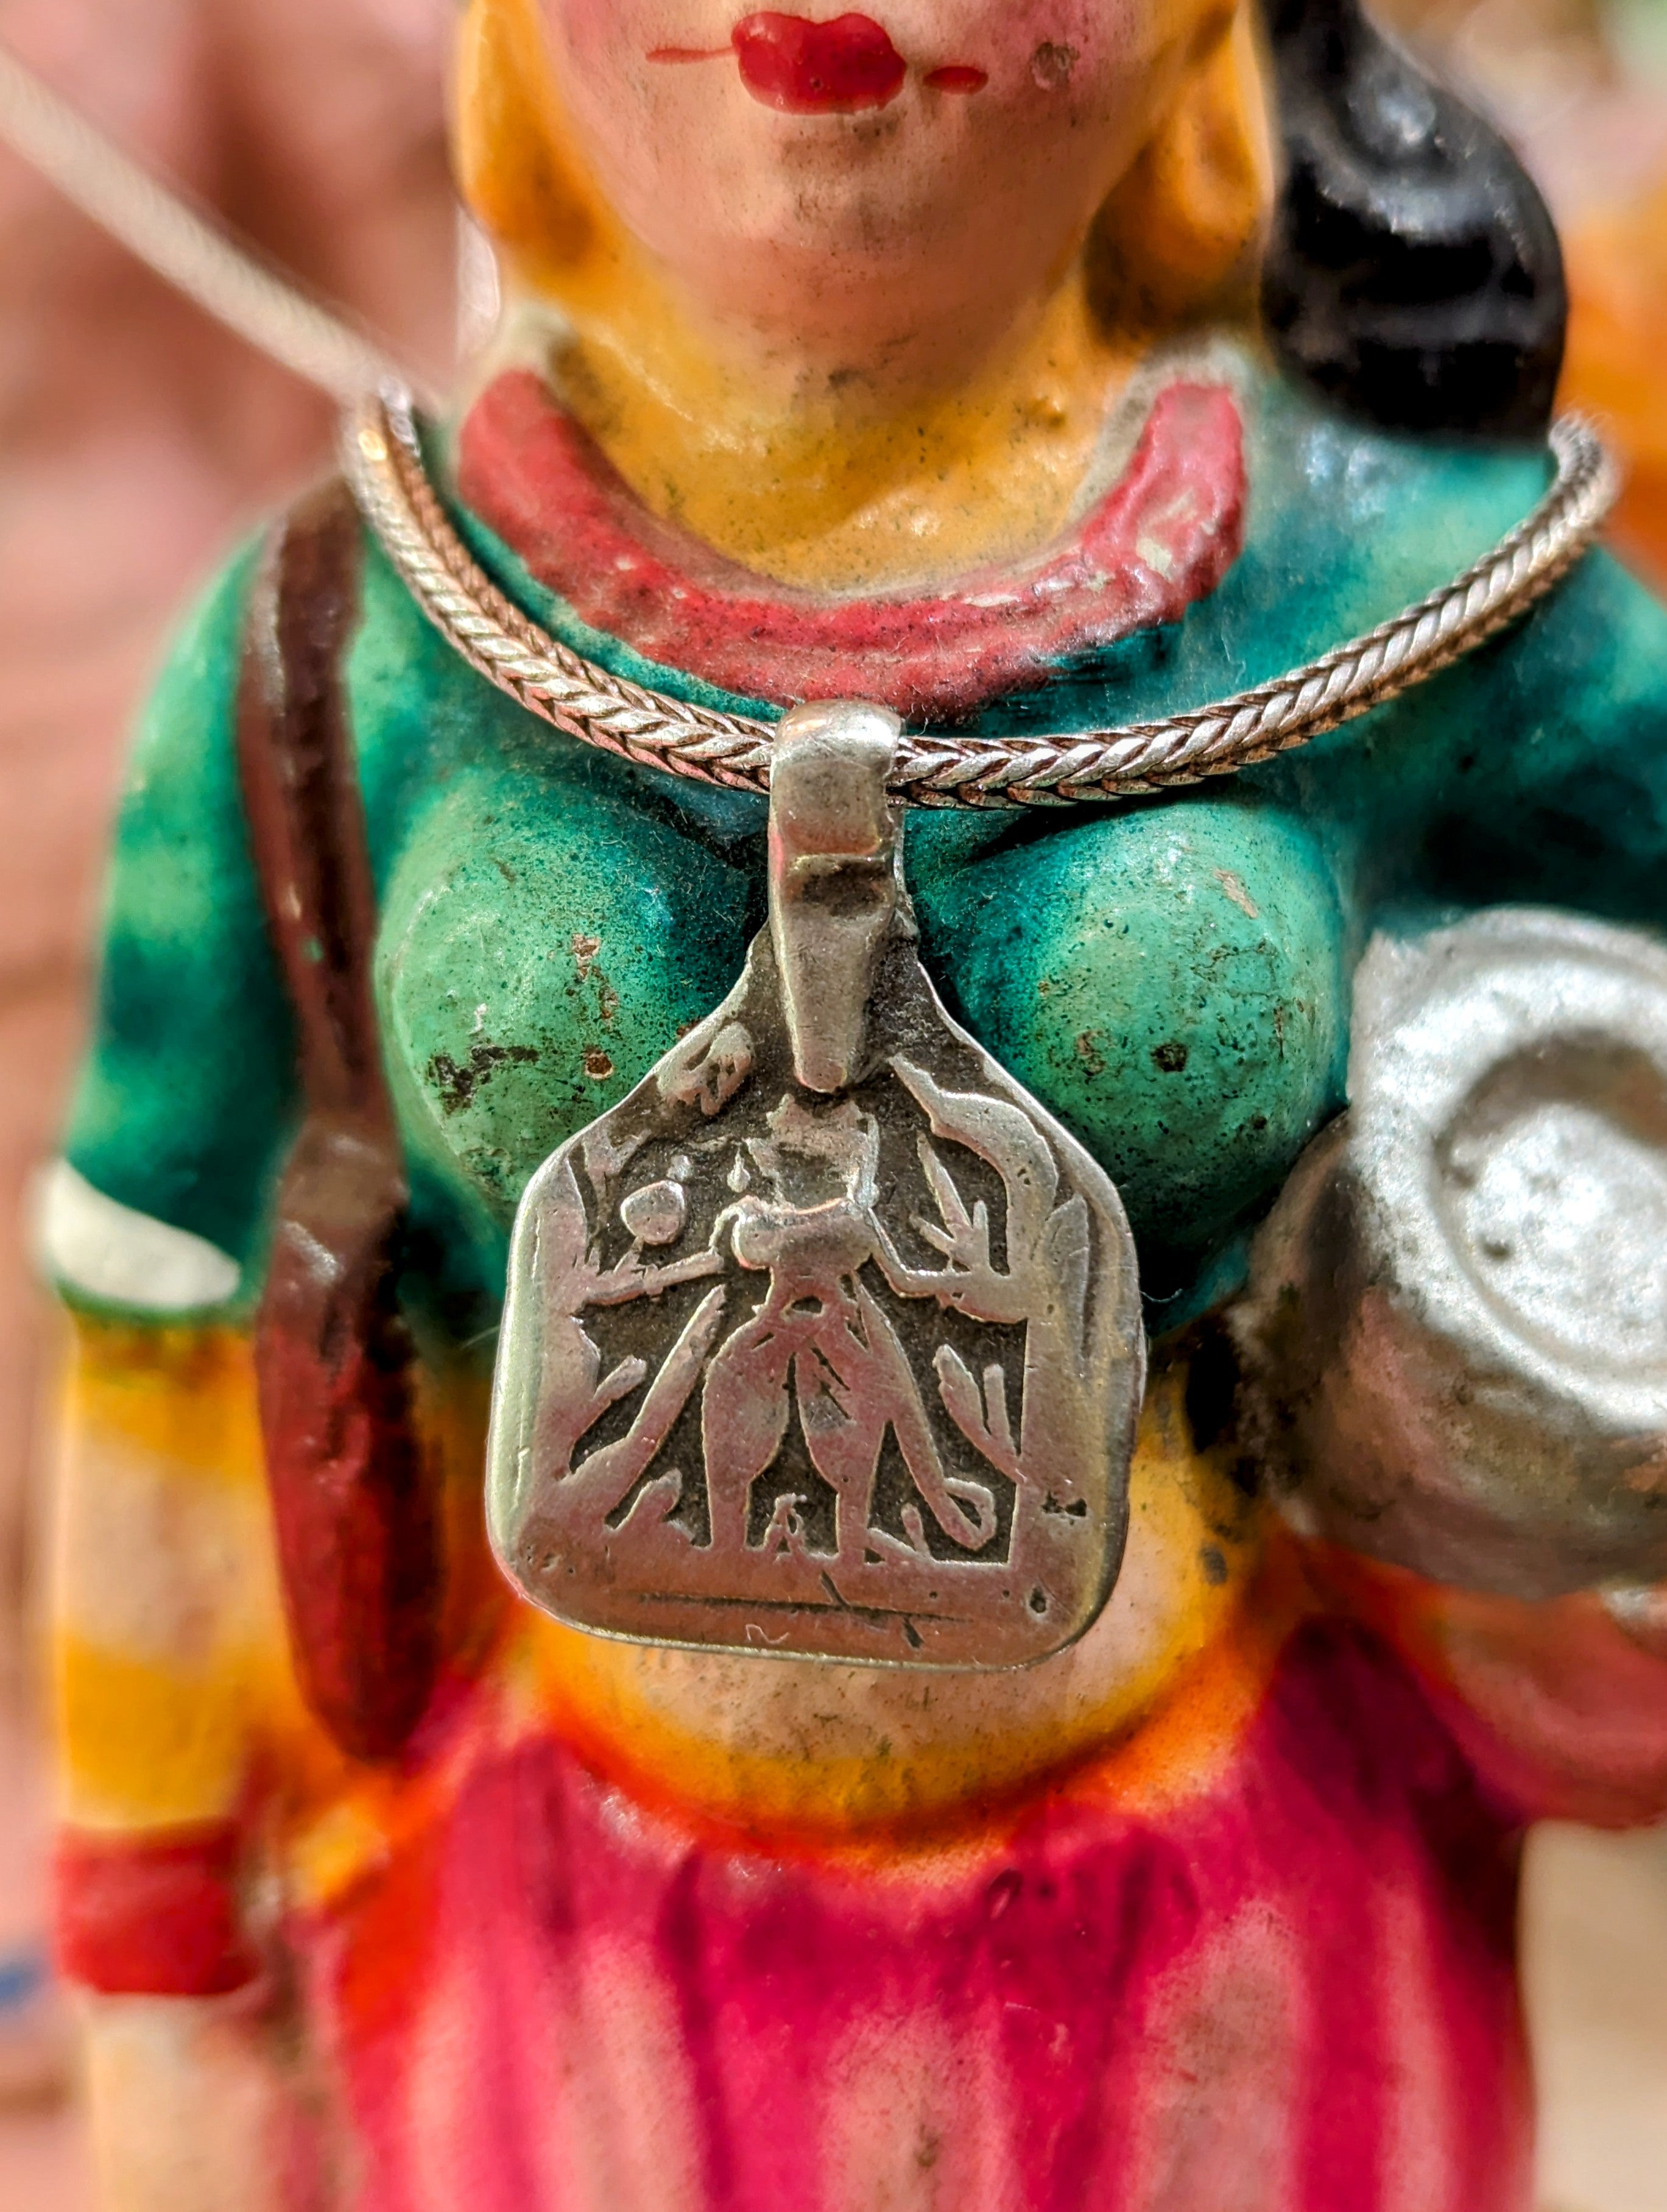 Antique Indian god amulet pendants - Kali